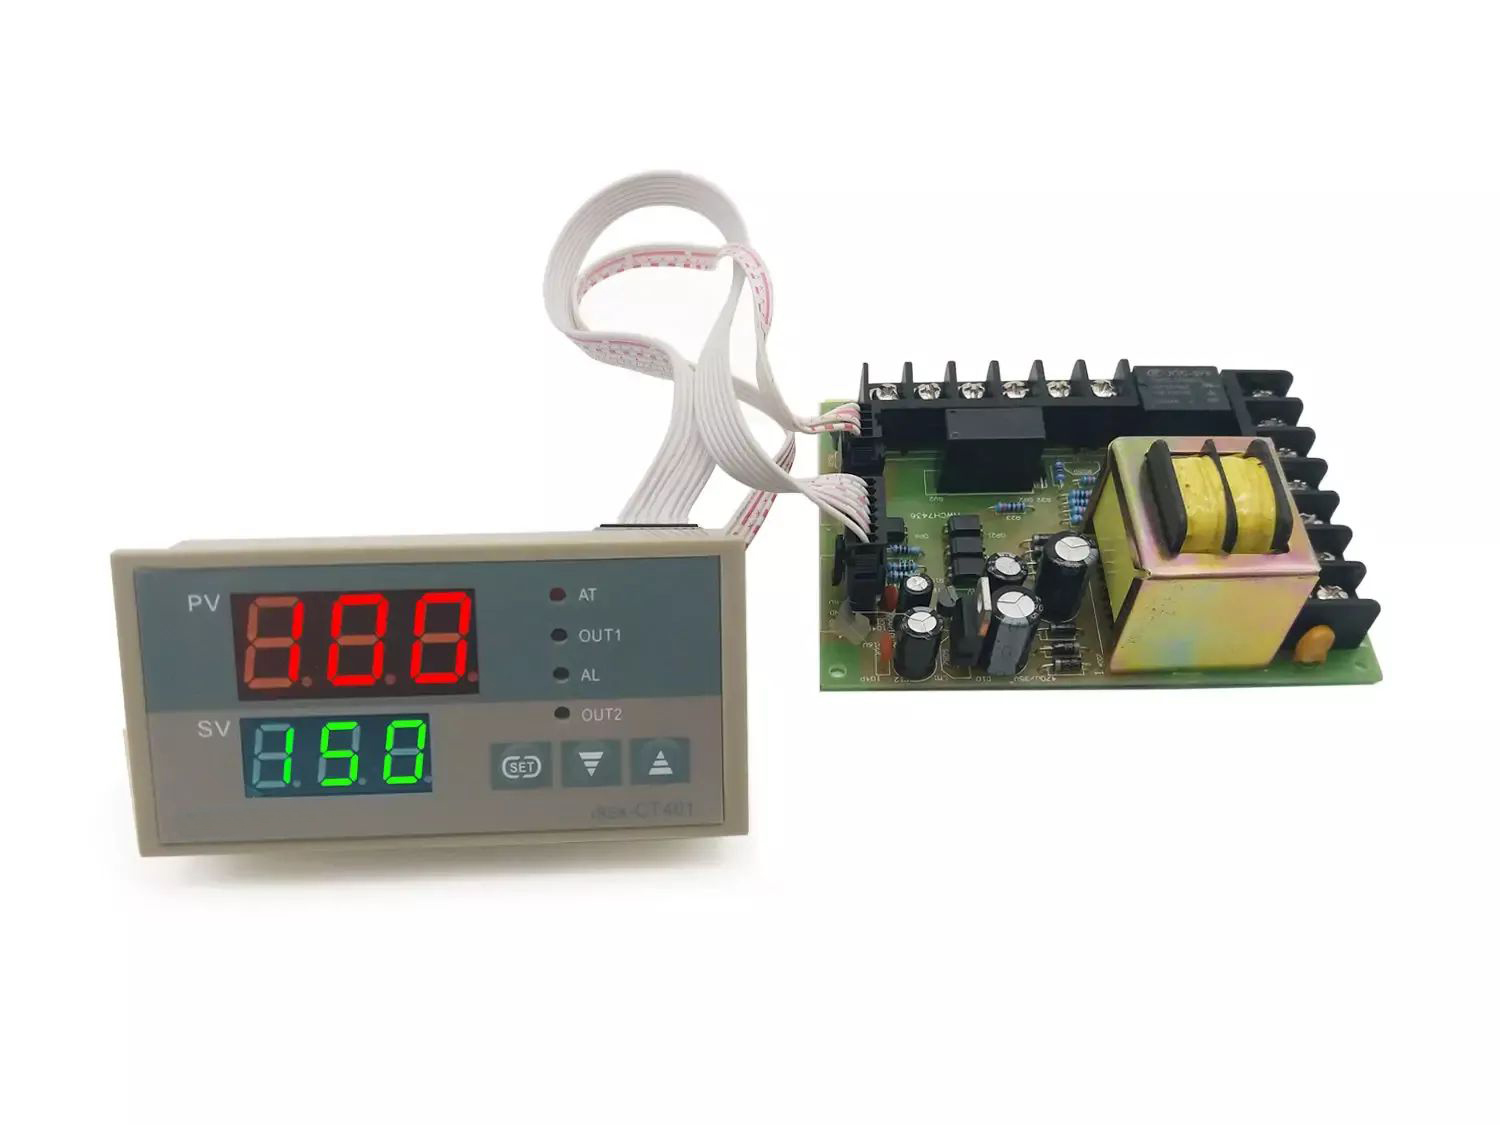 Oem Odm Automatic Constant Digital Thermostat Temperature Controller